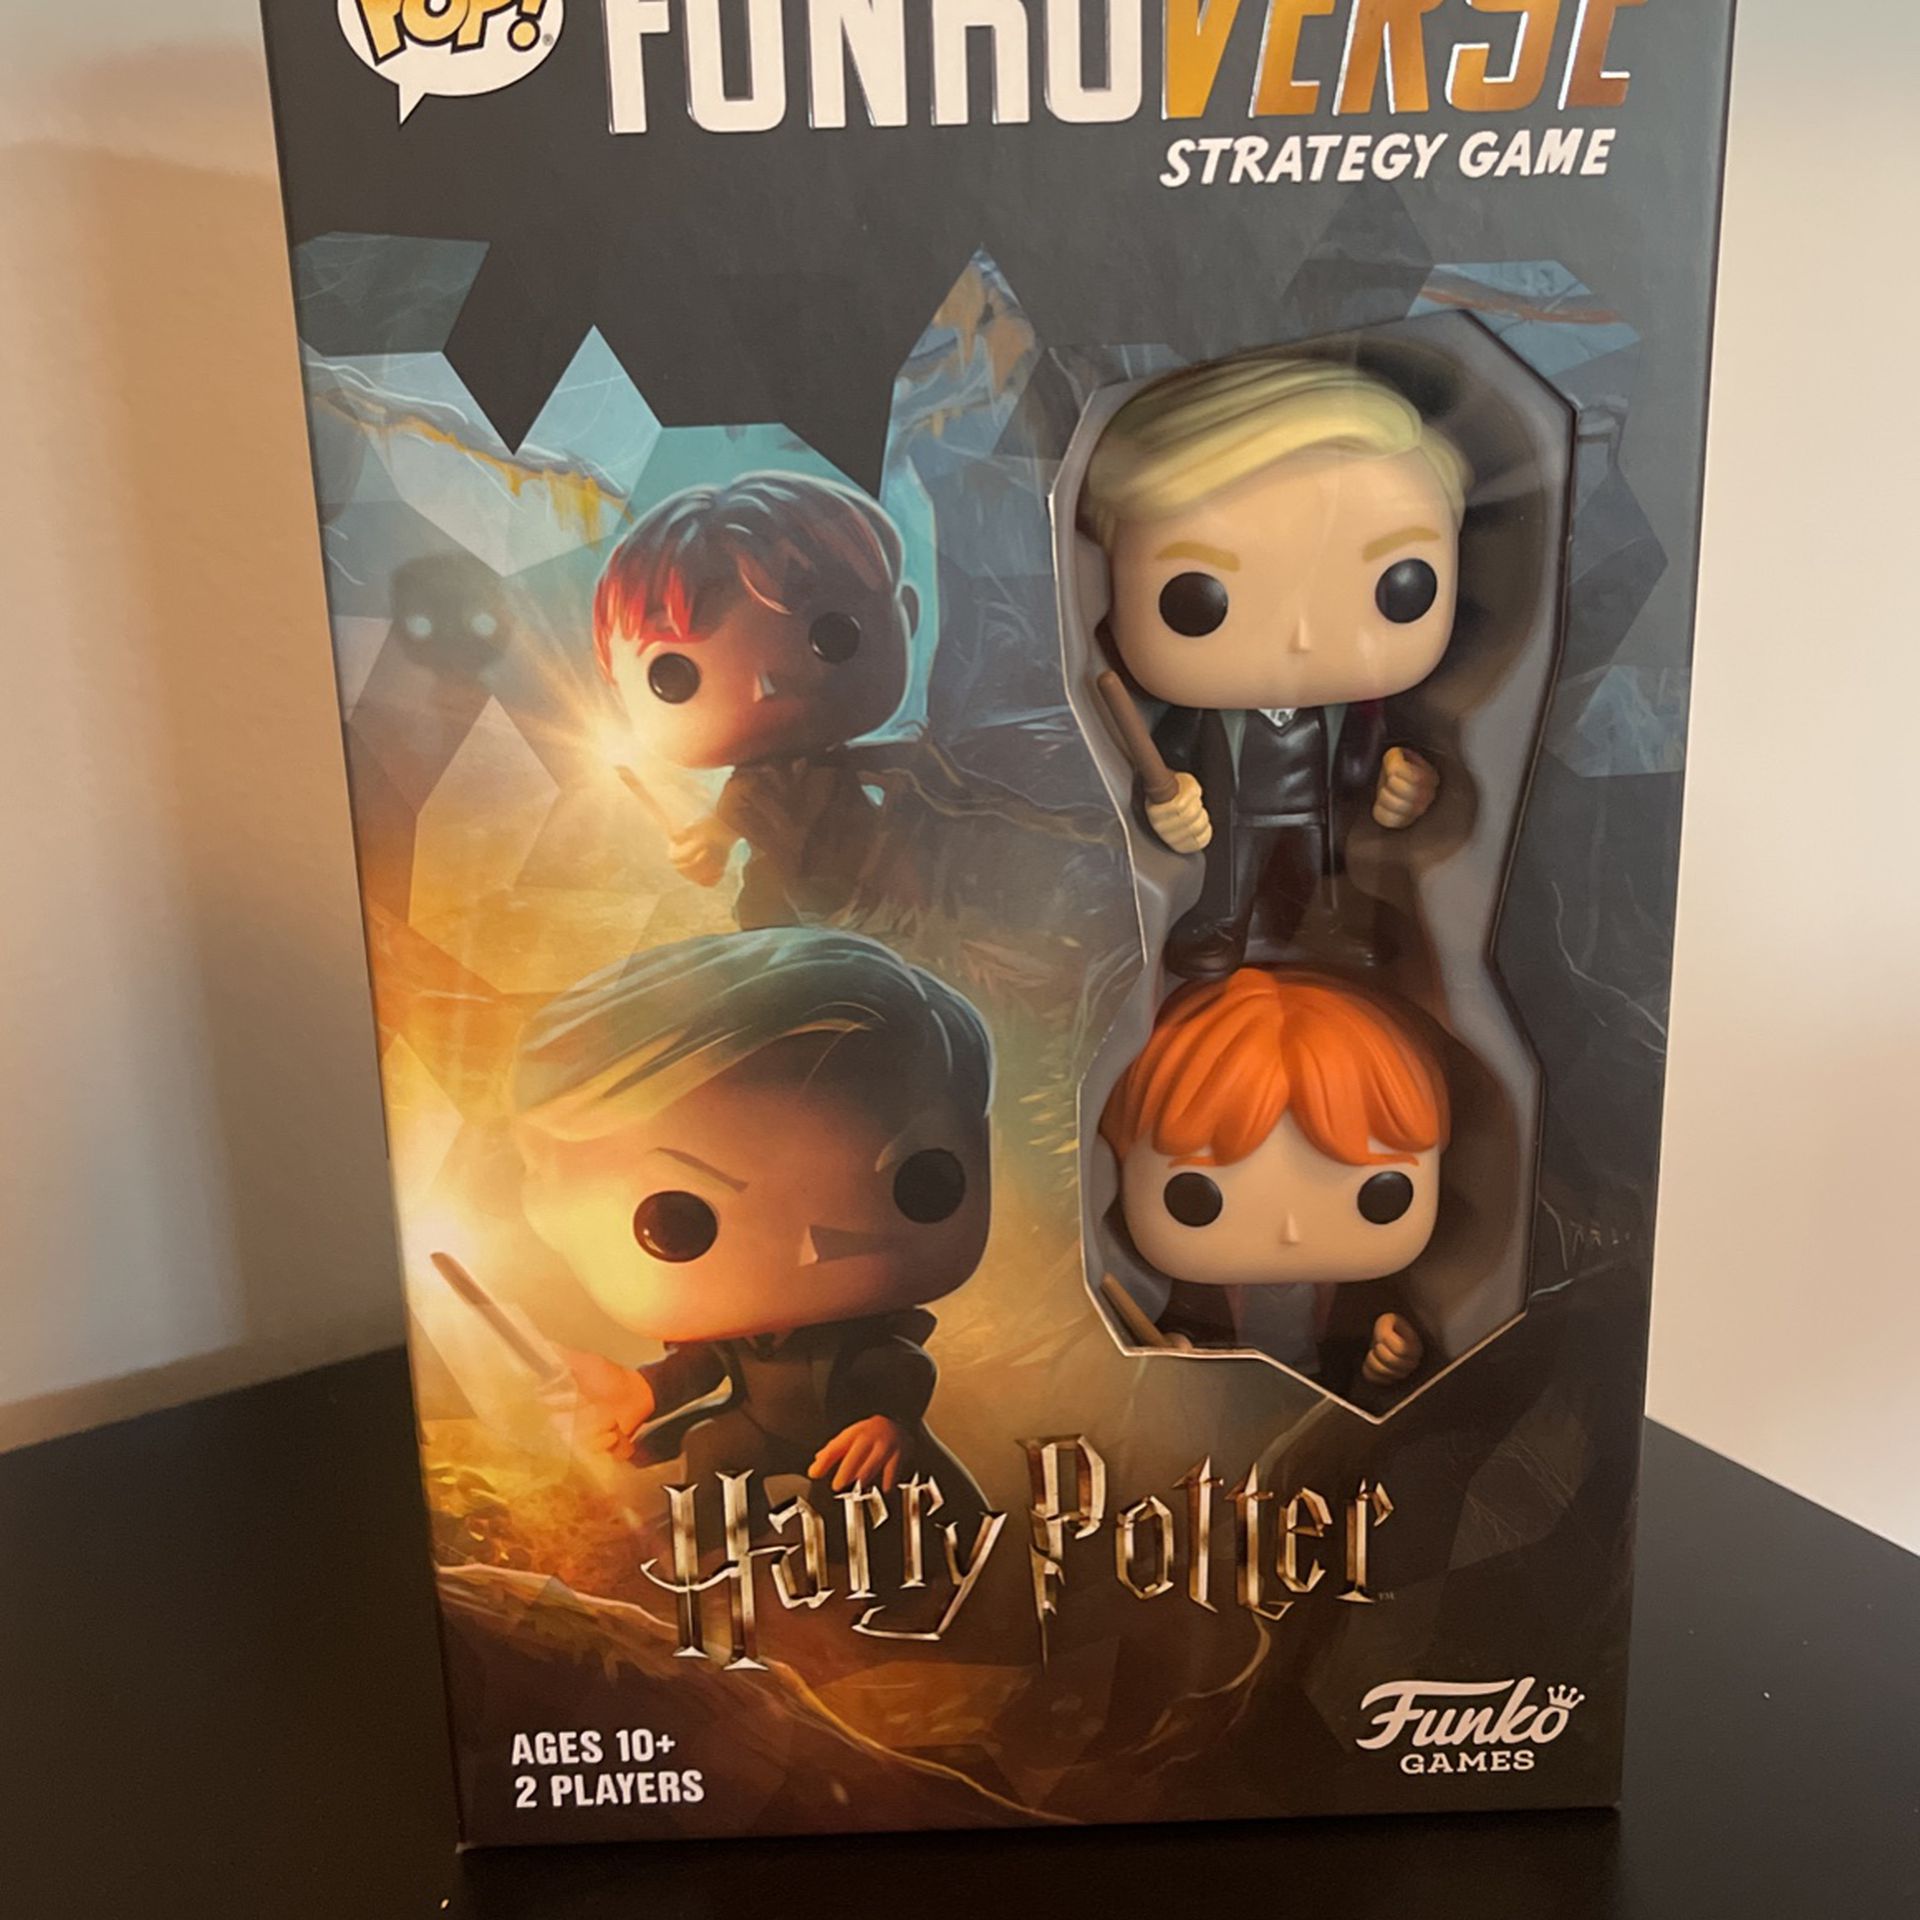 Harry Potter - Funko game